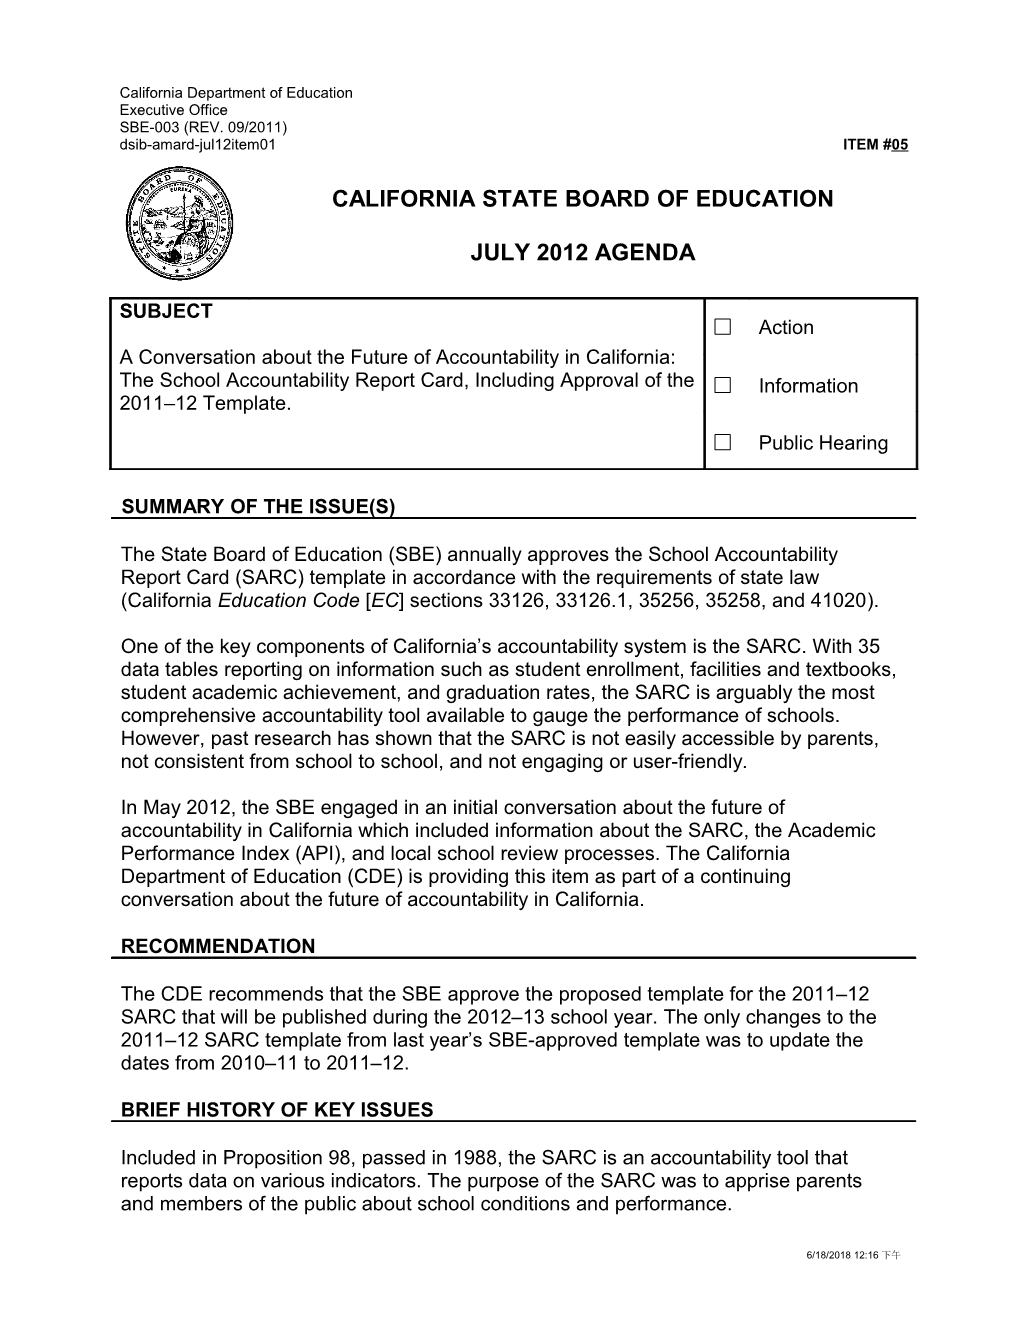 July 2012 Agenda Item 5 - Meeting Agendas (CA State Board of Education)